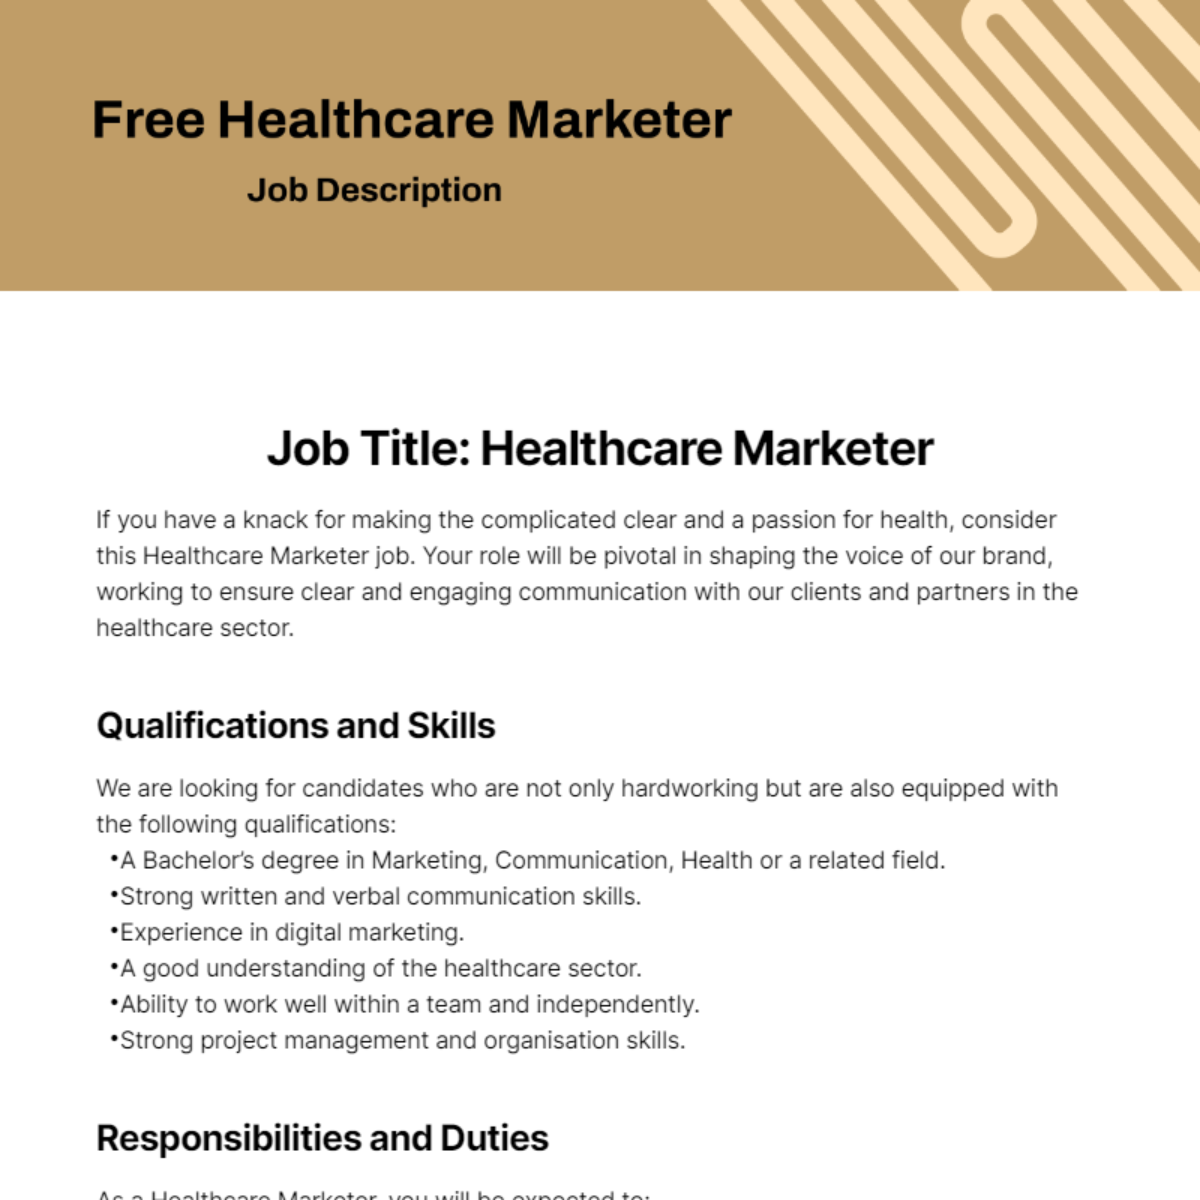 Free Healthcare Marketer Job Description Template